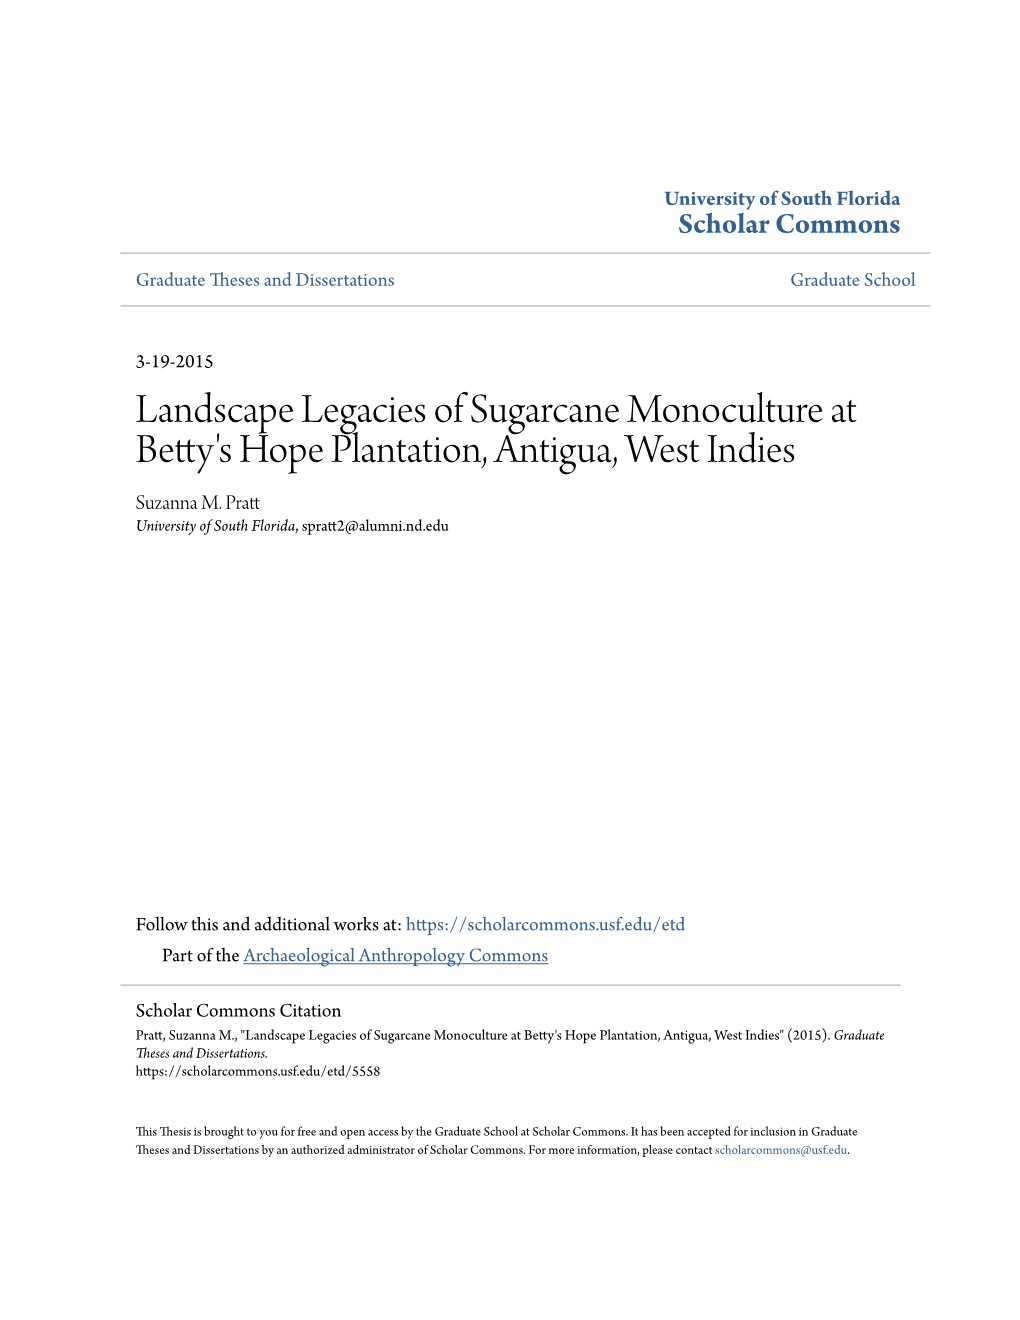 Landscape Legacies of Sugarcane Monoculture at Betty's Hope Plantation, Antigua, West Indies Suzanna M